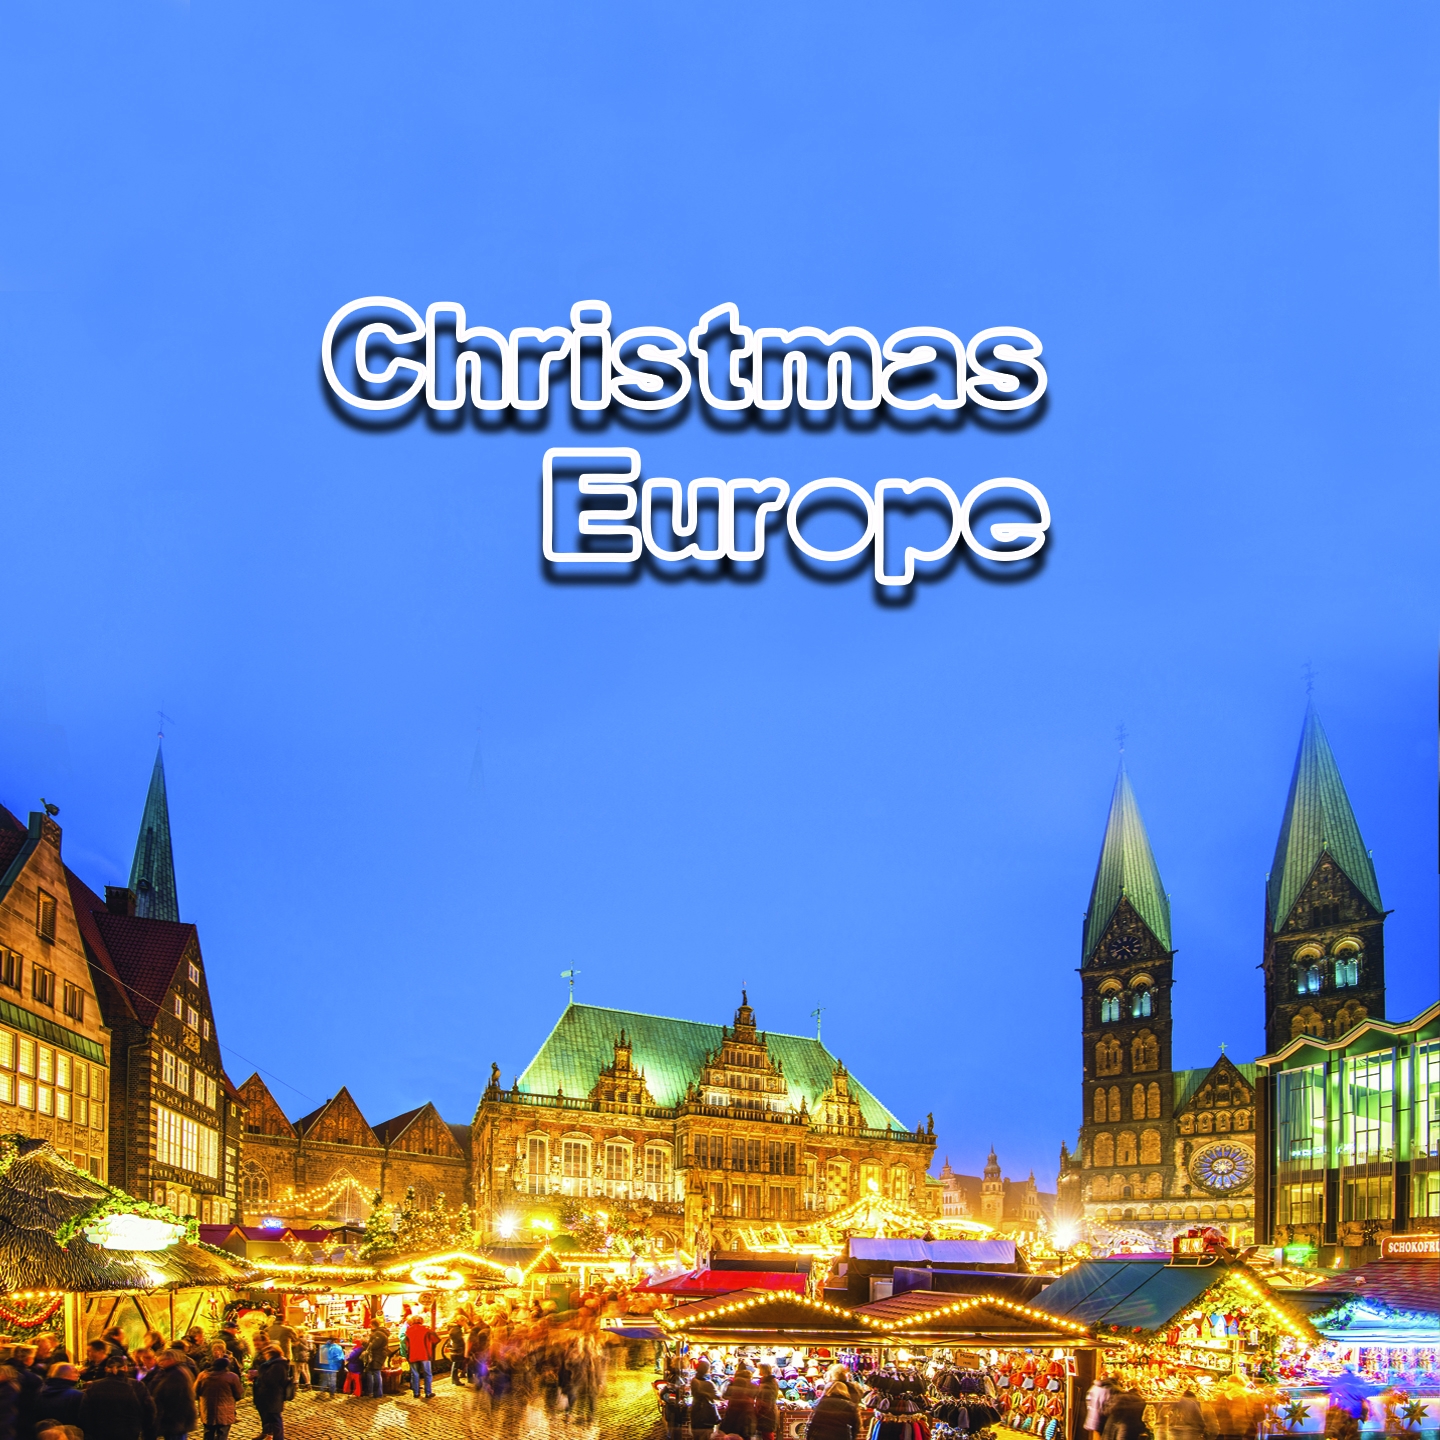 Christmas Europe (Atmosfere Natalizie)